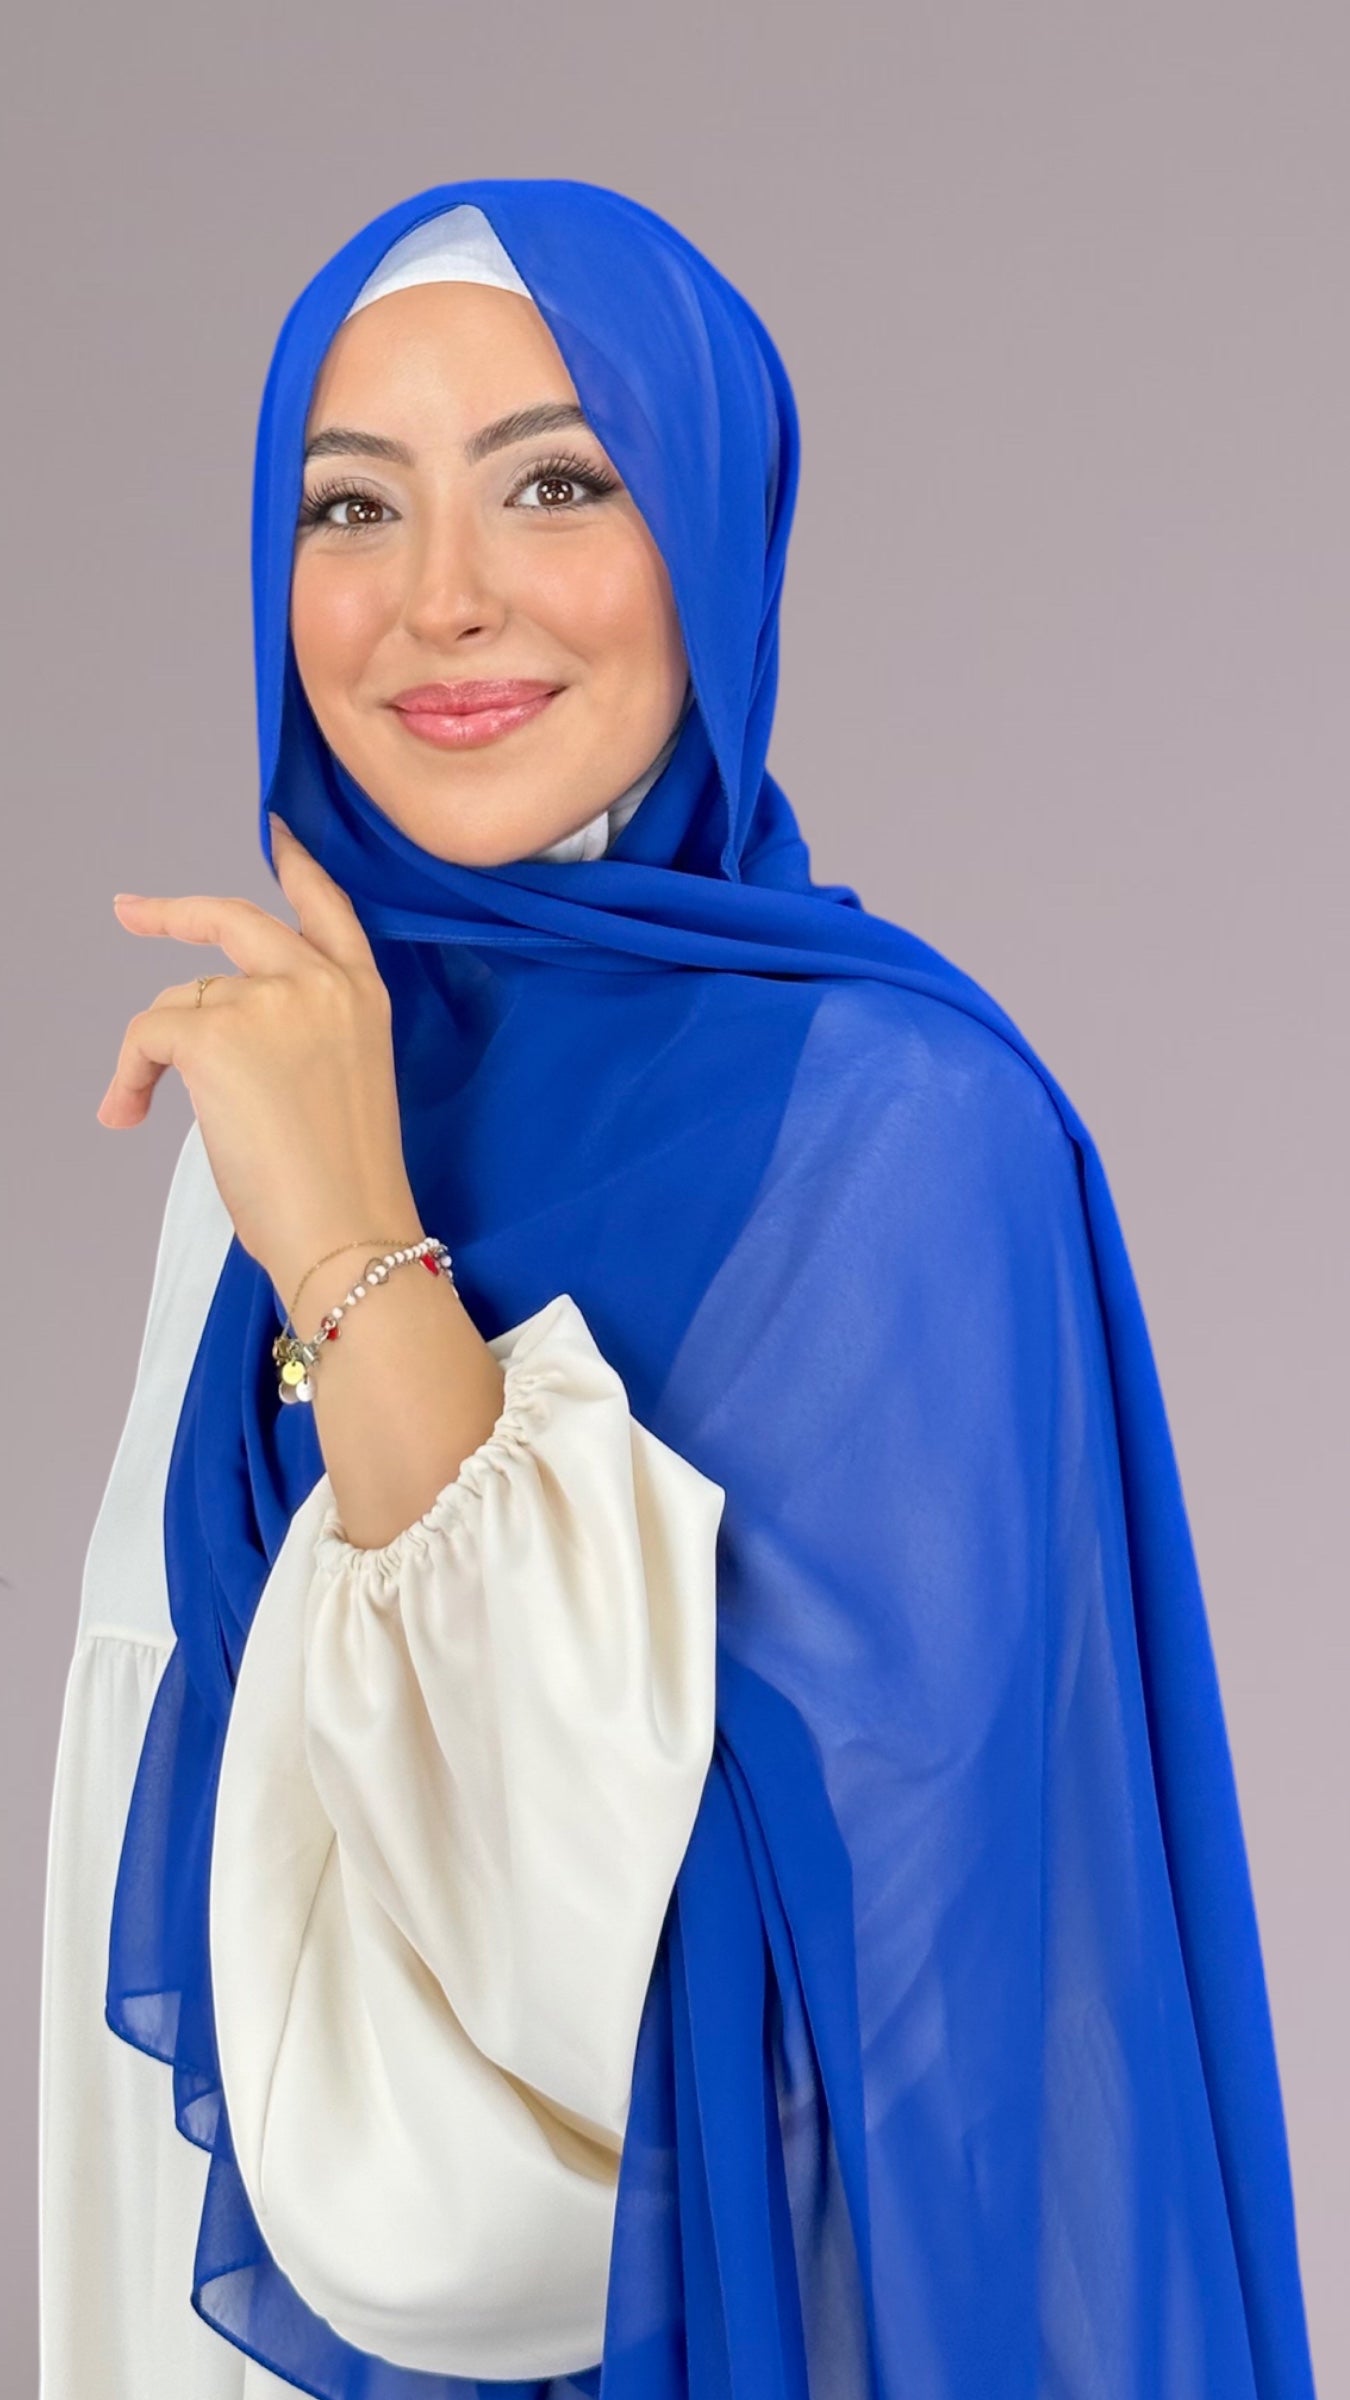 Hijab Chiffon Crepe blu elettrico - Hijab Paradise Hijab, chador, velo, turbante, foulard, copricapo, musulmano, islamico, sciarpa,  trasparente, chiffon crepe